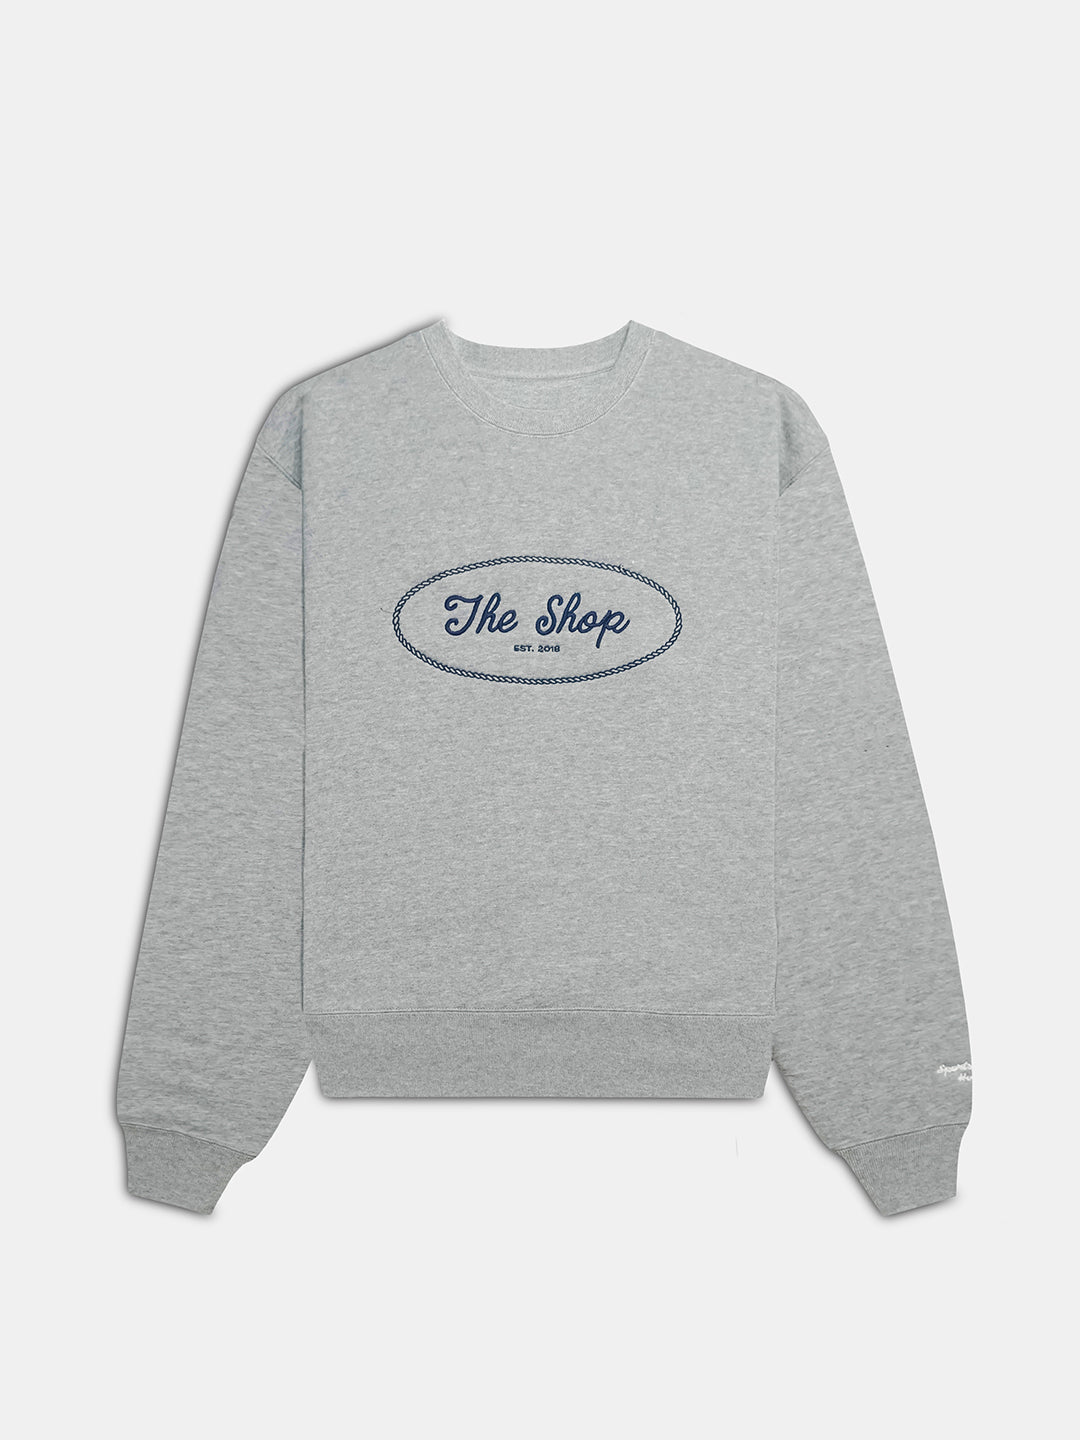 The Shop By Hand Crewneck Sweatshirt Grey - Front